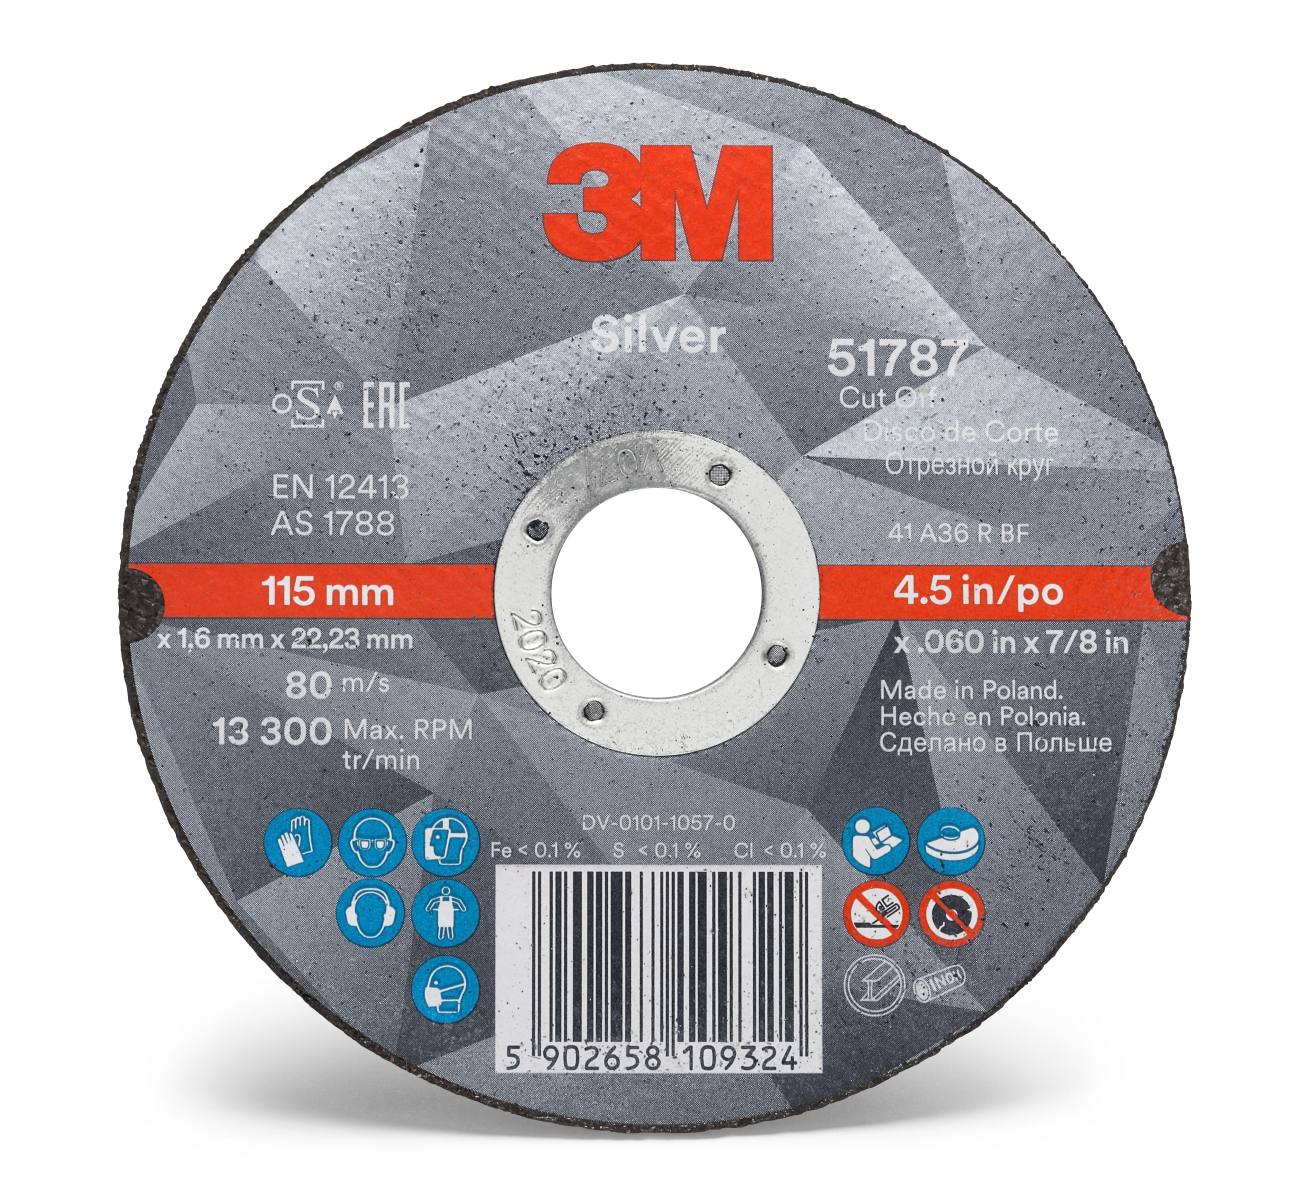 3M Silver Cut-Off Wheel Trennscheibe, 125 mm, 2,0 mm, 22,23 mm, T41, 51795